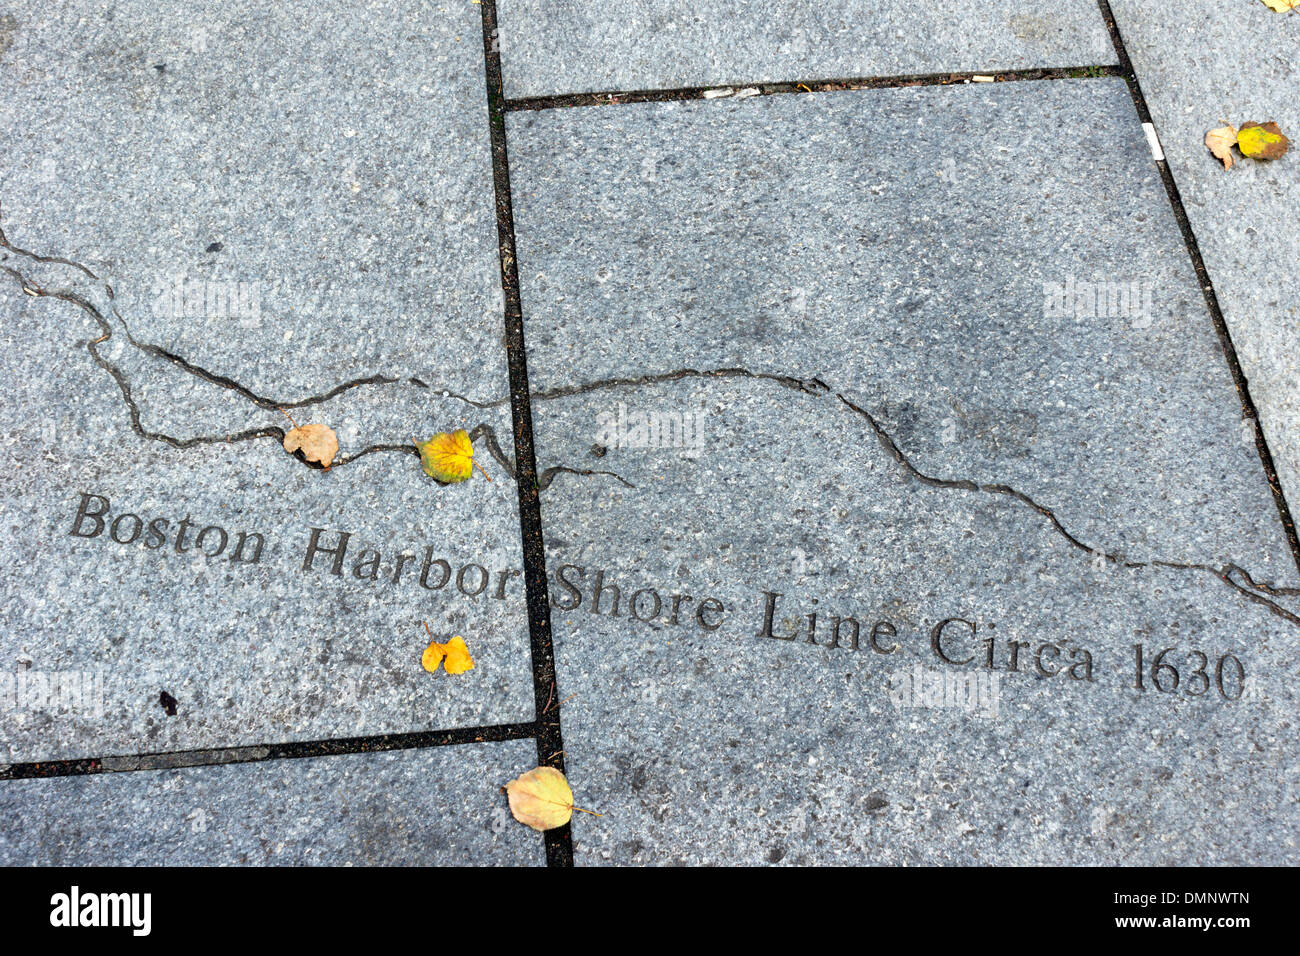 Pavement markings showing Boston Harbour Shore Line in 1630 Boston, Massachusetts, USA Stock Photo